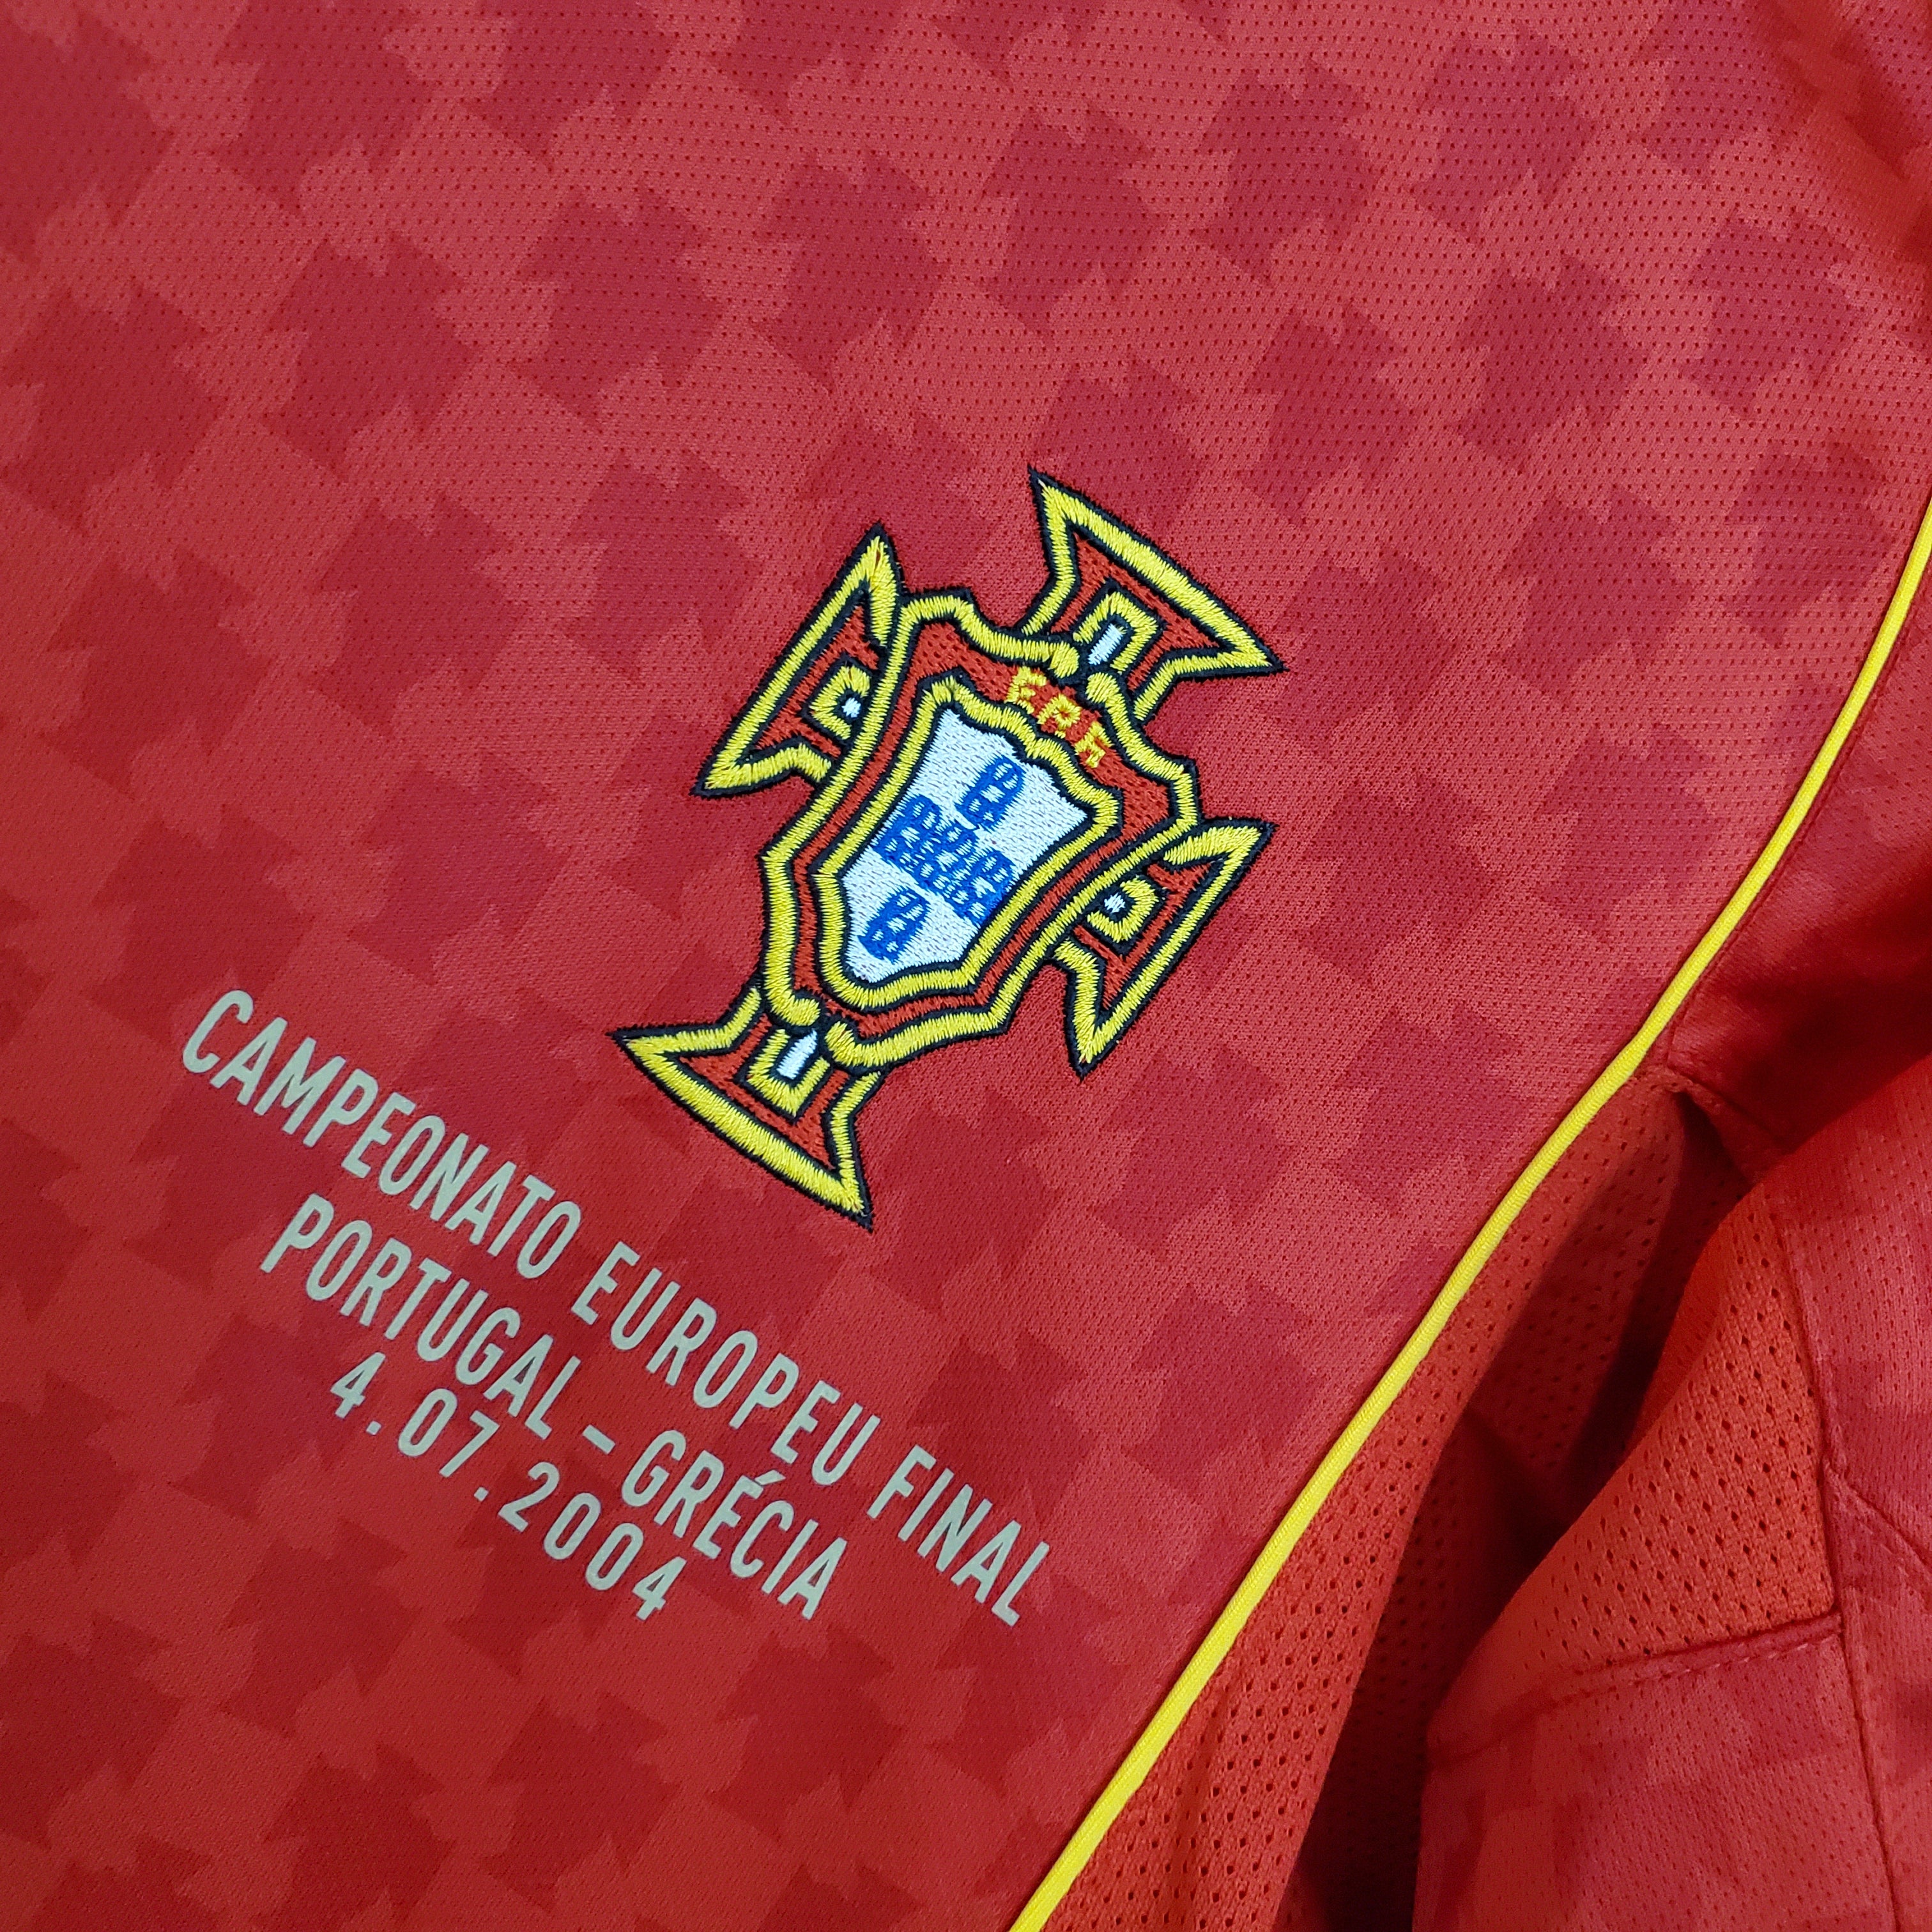 Portugal 2004 Euro Final Jersey